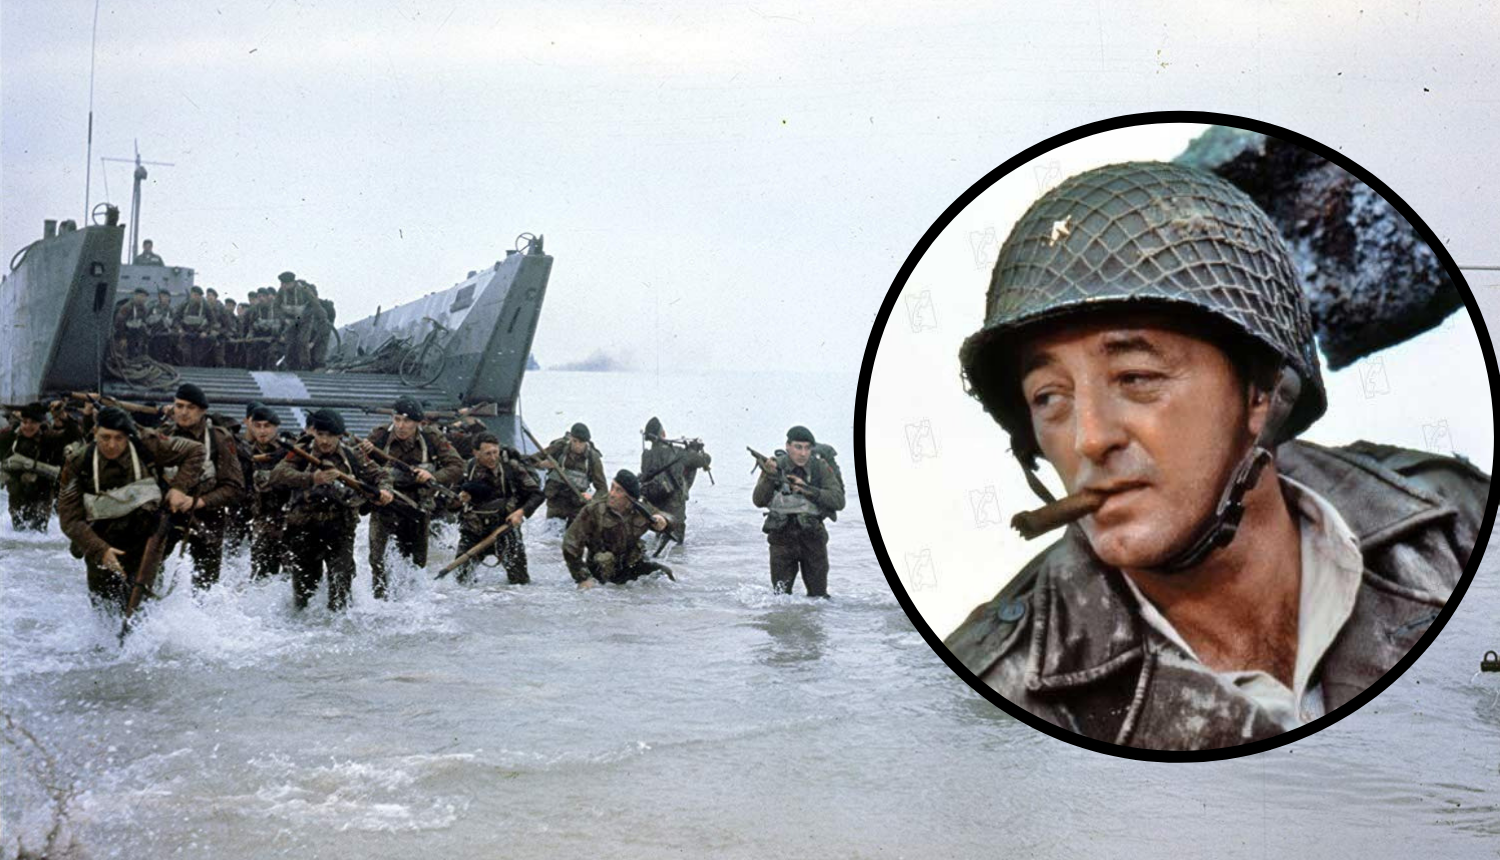 Dan D: 'Ludo hrabri' Hrvat bio heroj iskrcavanja u Normandiji